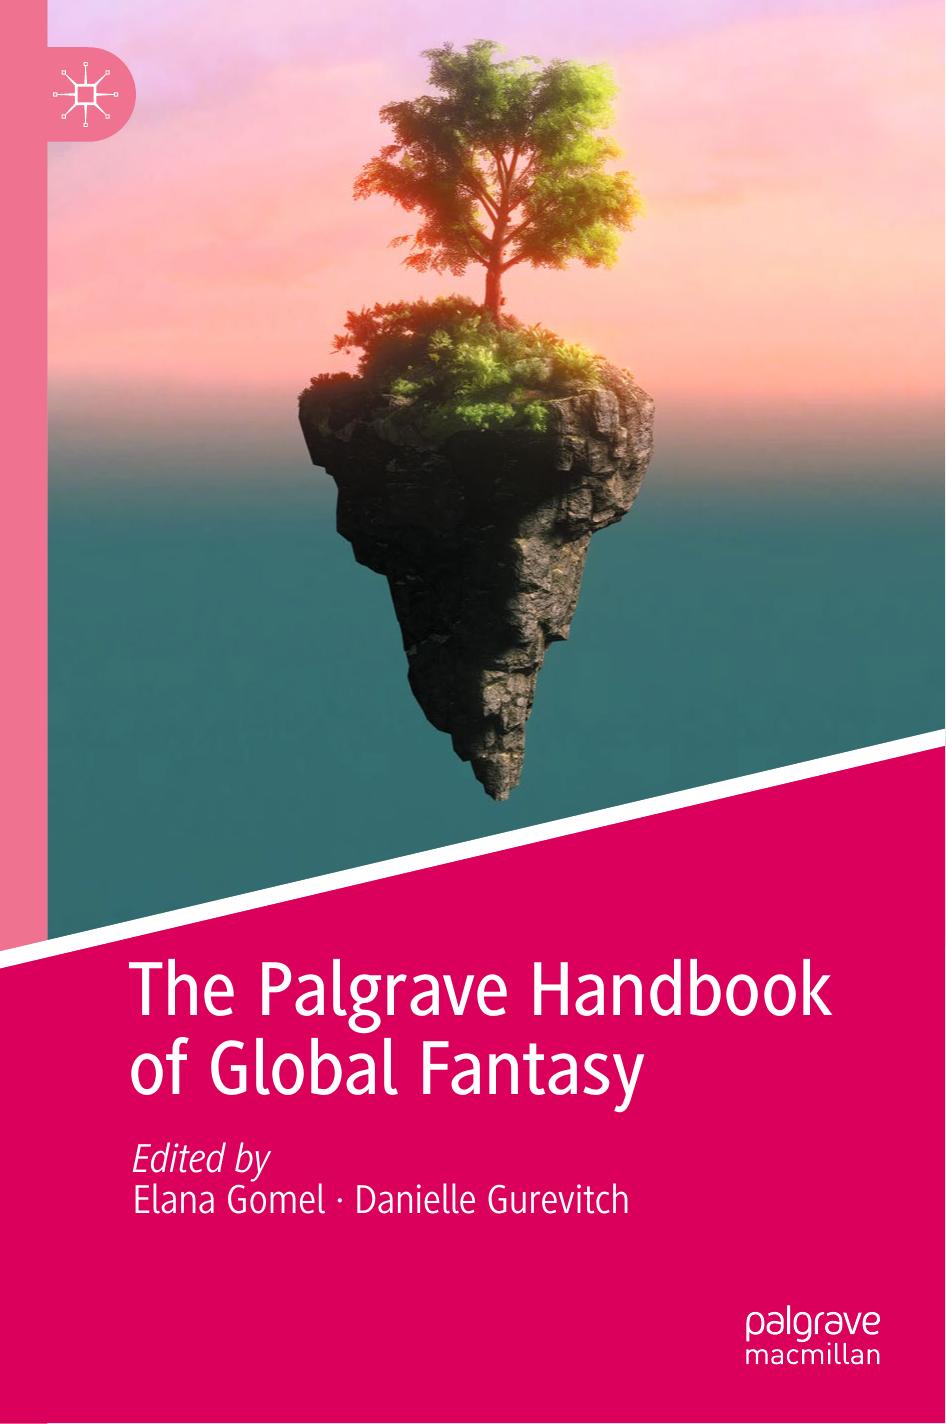 The Palgrave Handbook of Global Fantasy by Elana Gomel Danielle Gurevitch